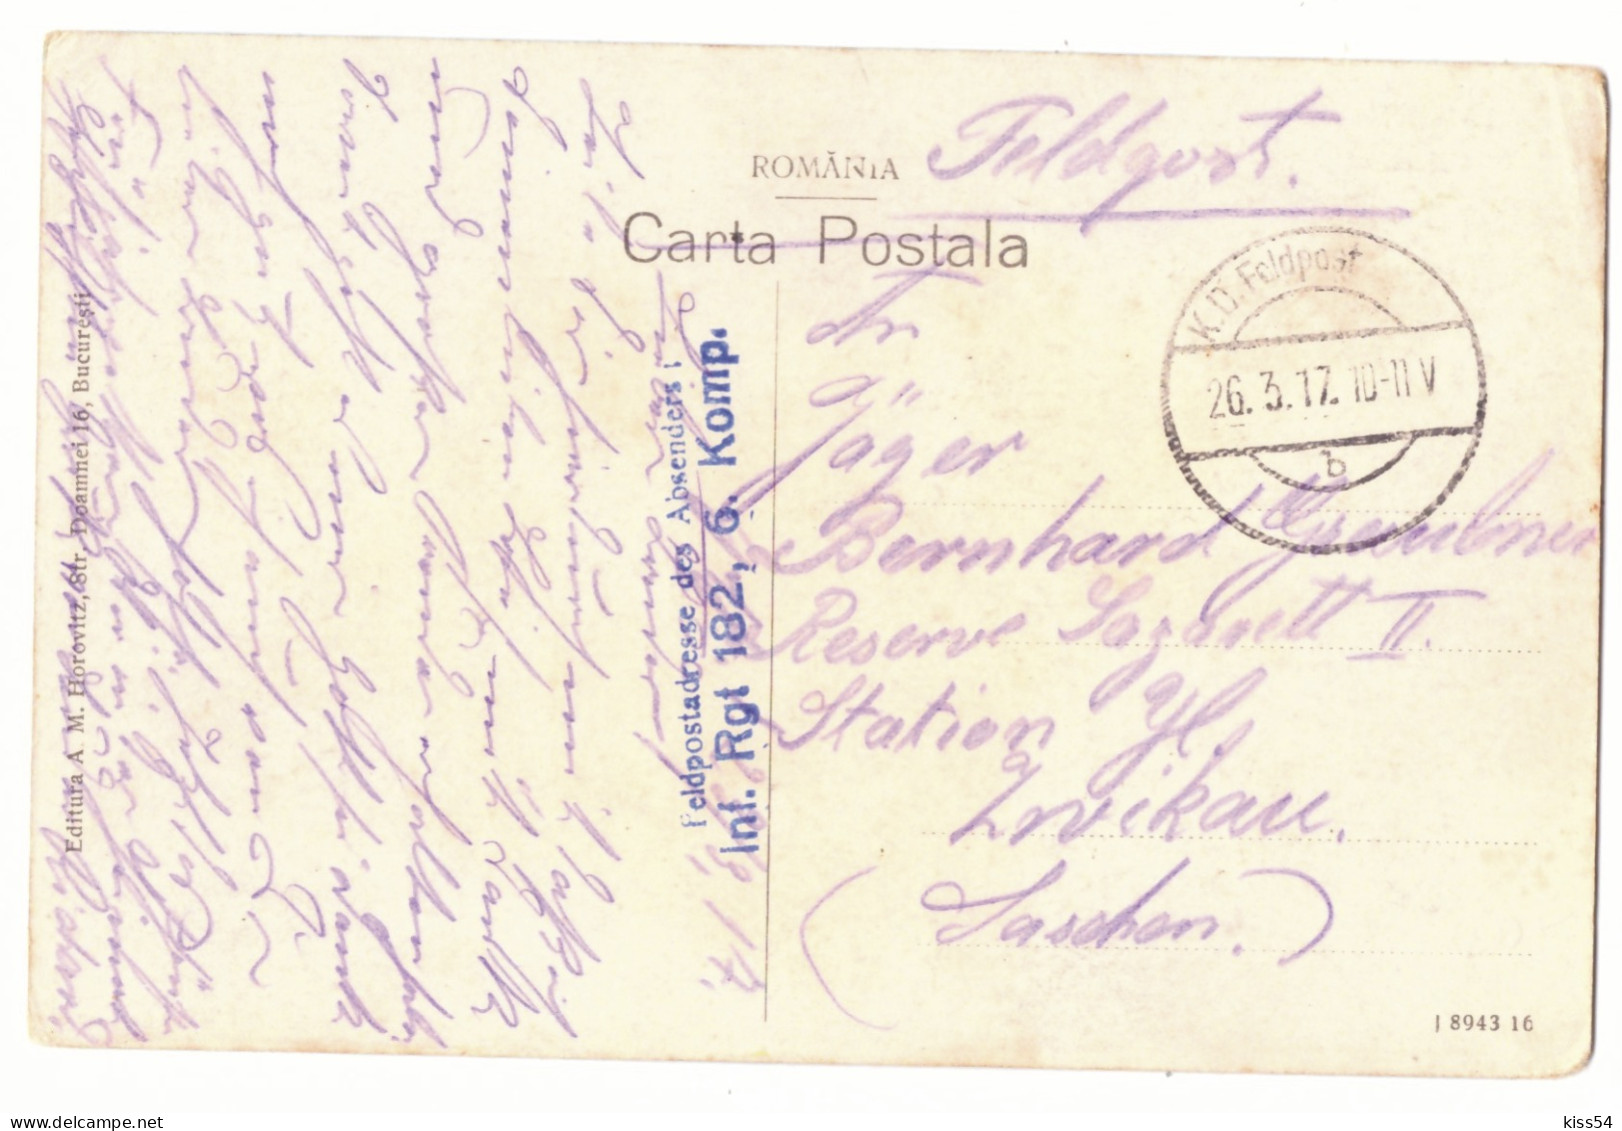 RO 52 - 19911 RM. VALCEA, Ave. Tudor Vladimirescu, Romania - Old Postcard, CENSOR - Used - 1917 - Roumanie